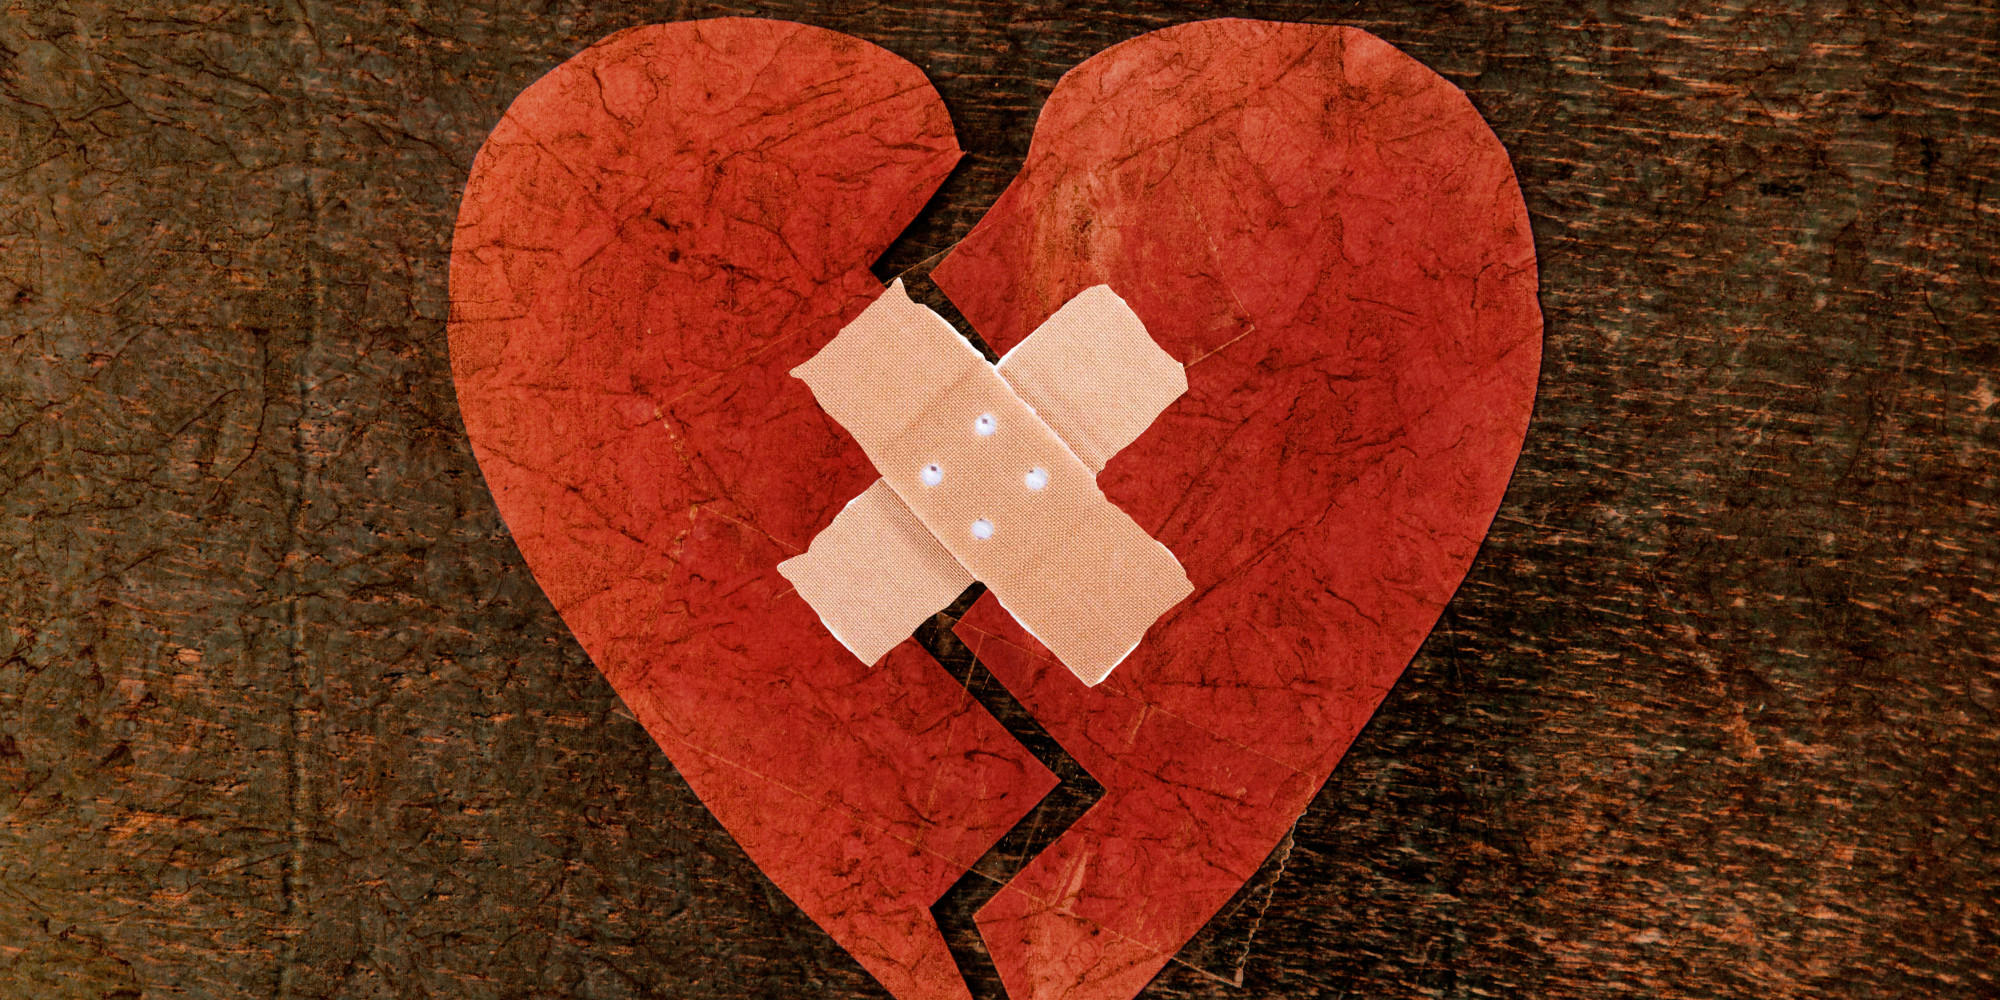 Broken Heart Wallpapers Hd - Relationship Healing - 2000x1000 Wallpaper -  